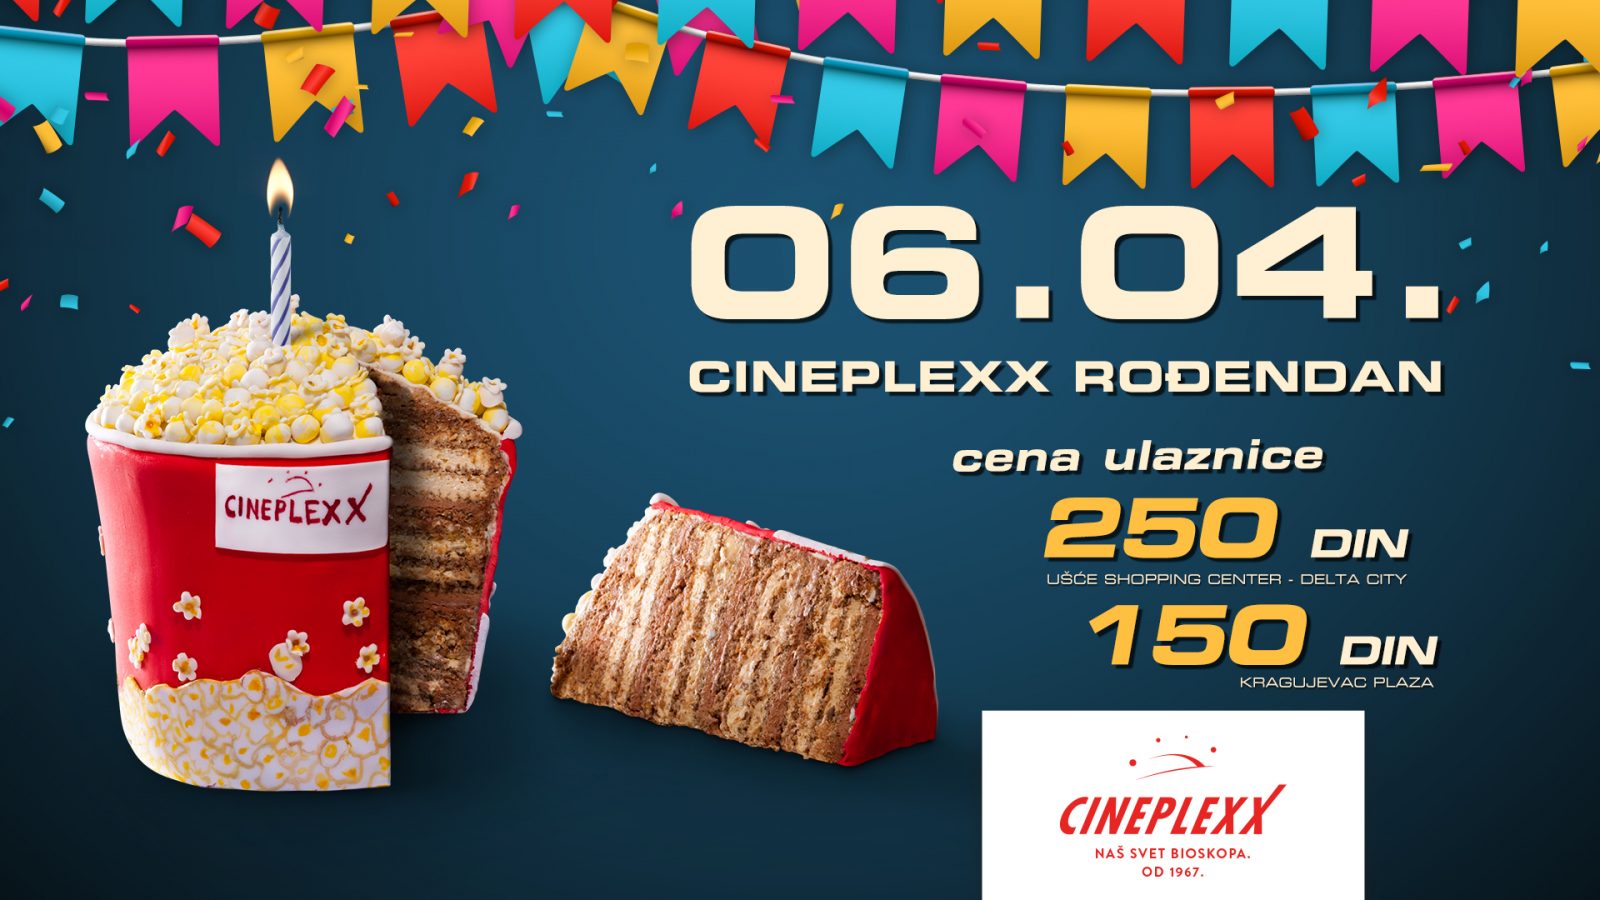 Rođendansko slavlje bioskopa Cineplexx